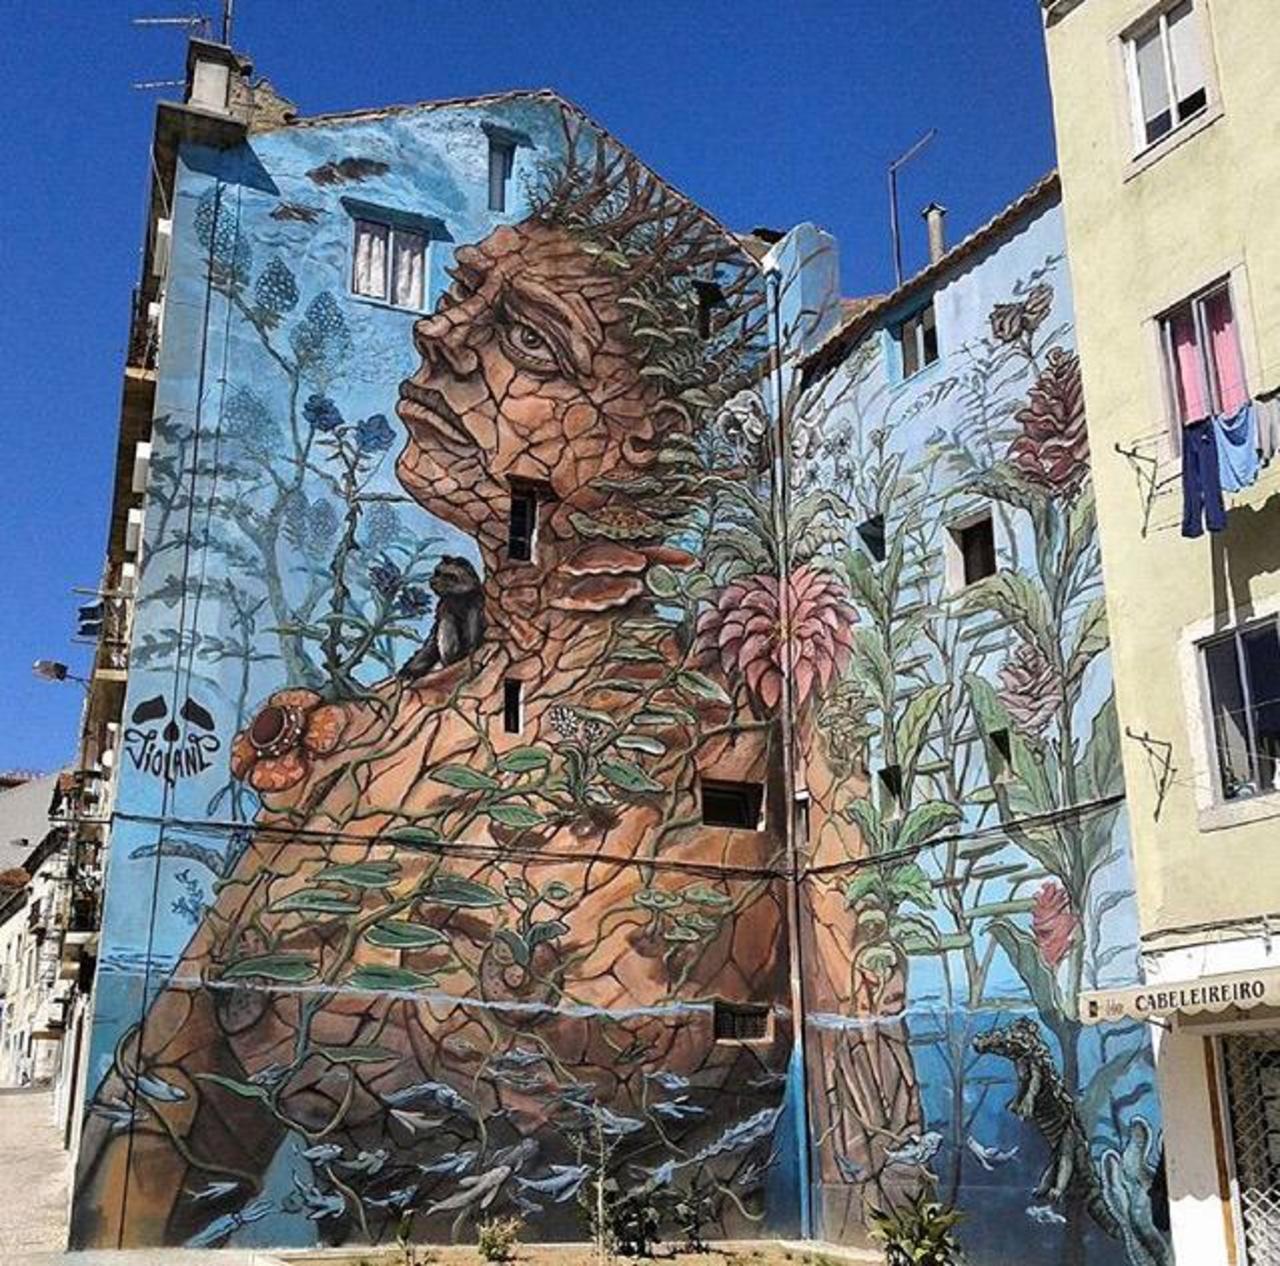 Street Art by Violant 

#art #graffiti #mural #streetart http://t.co/dABKmAFE3J